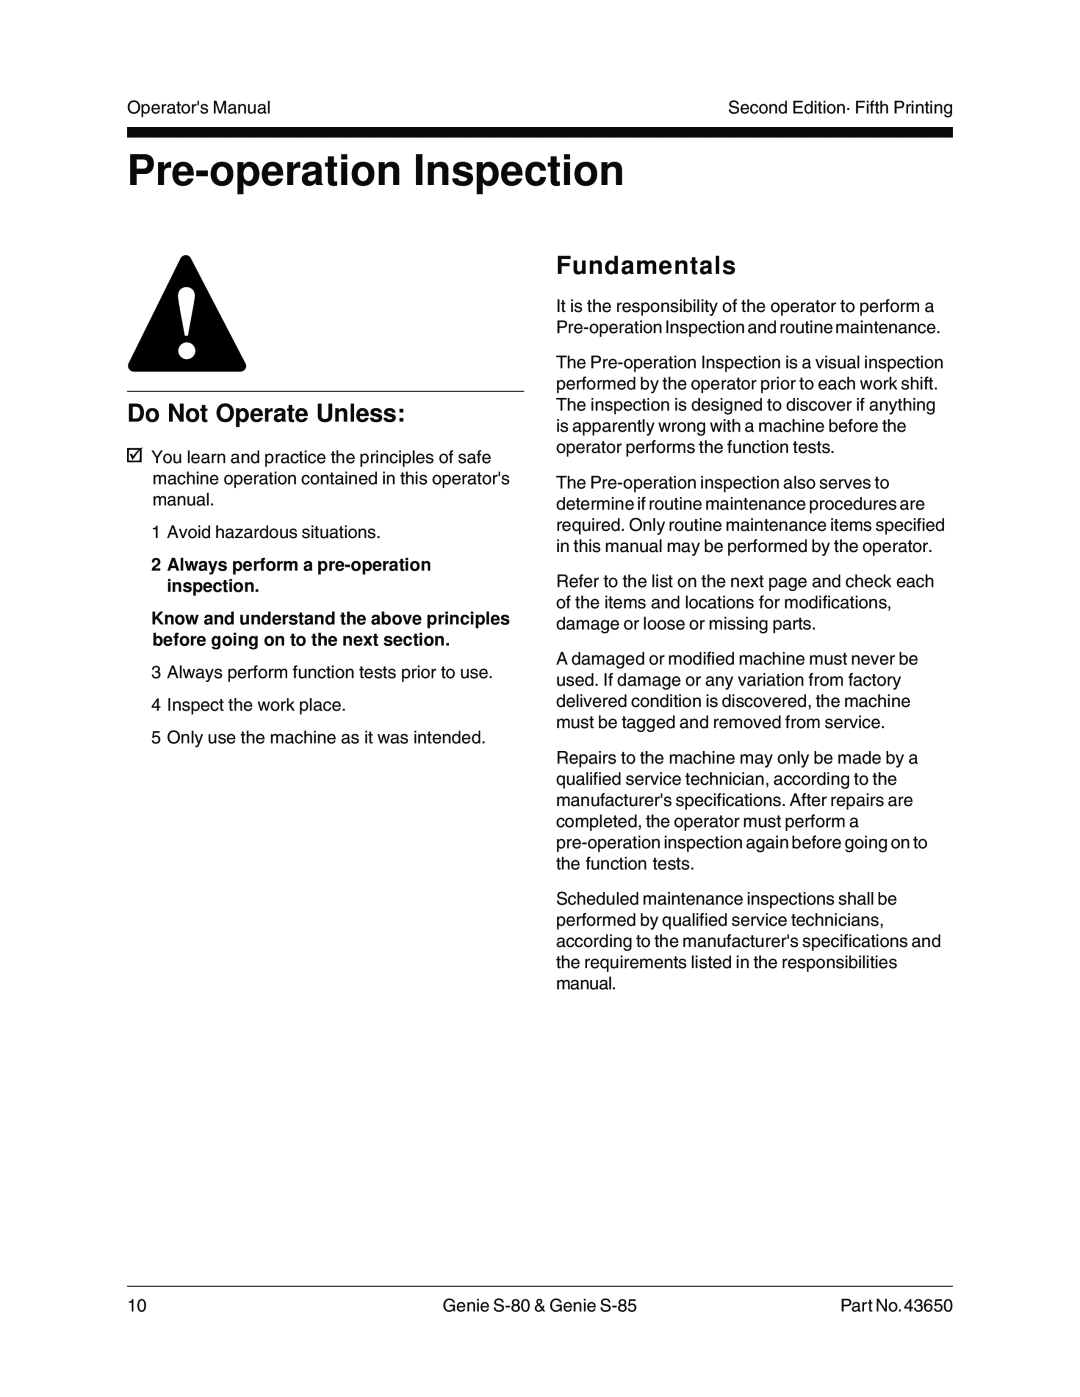 Genie S-80, S-85 Pre-operationInspection, Fundamentals, 2Always perform a pre-operationinspection, Do Not Operate Unless 